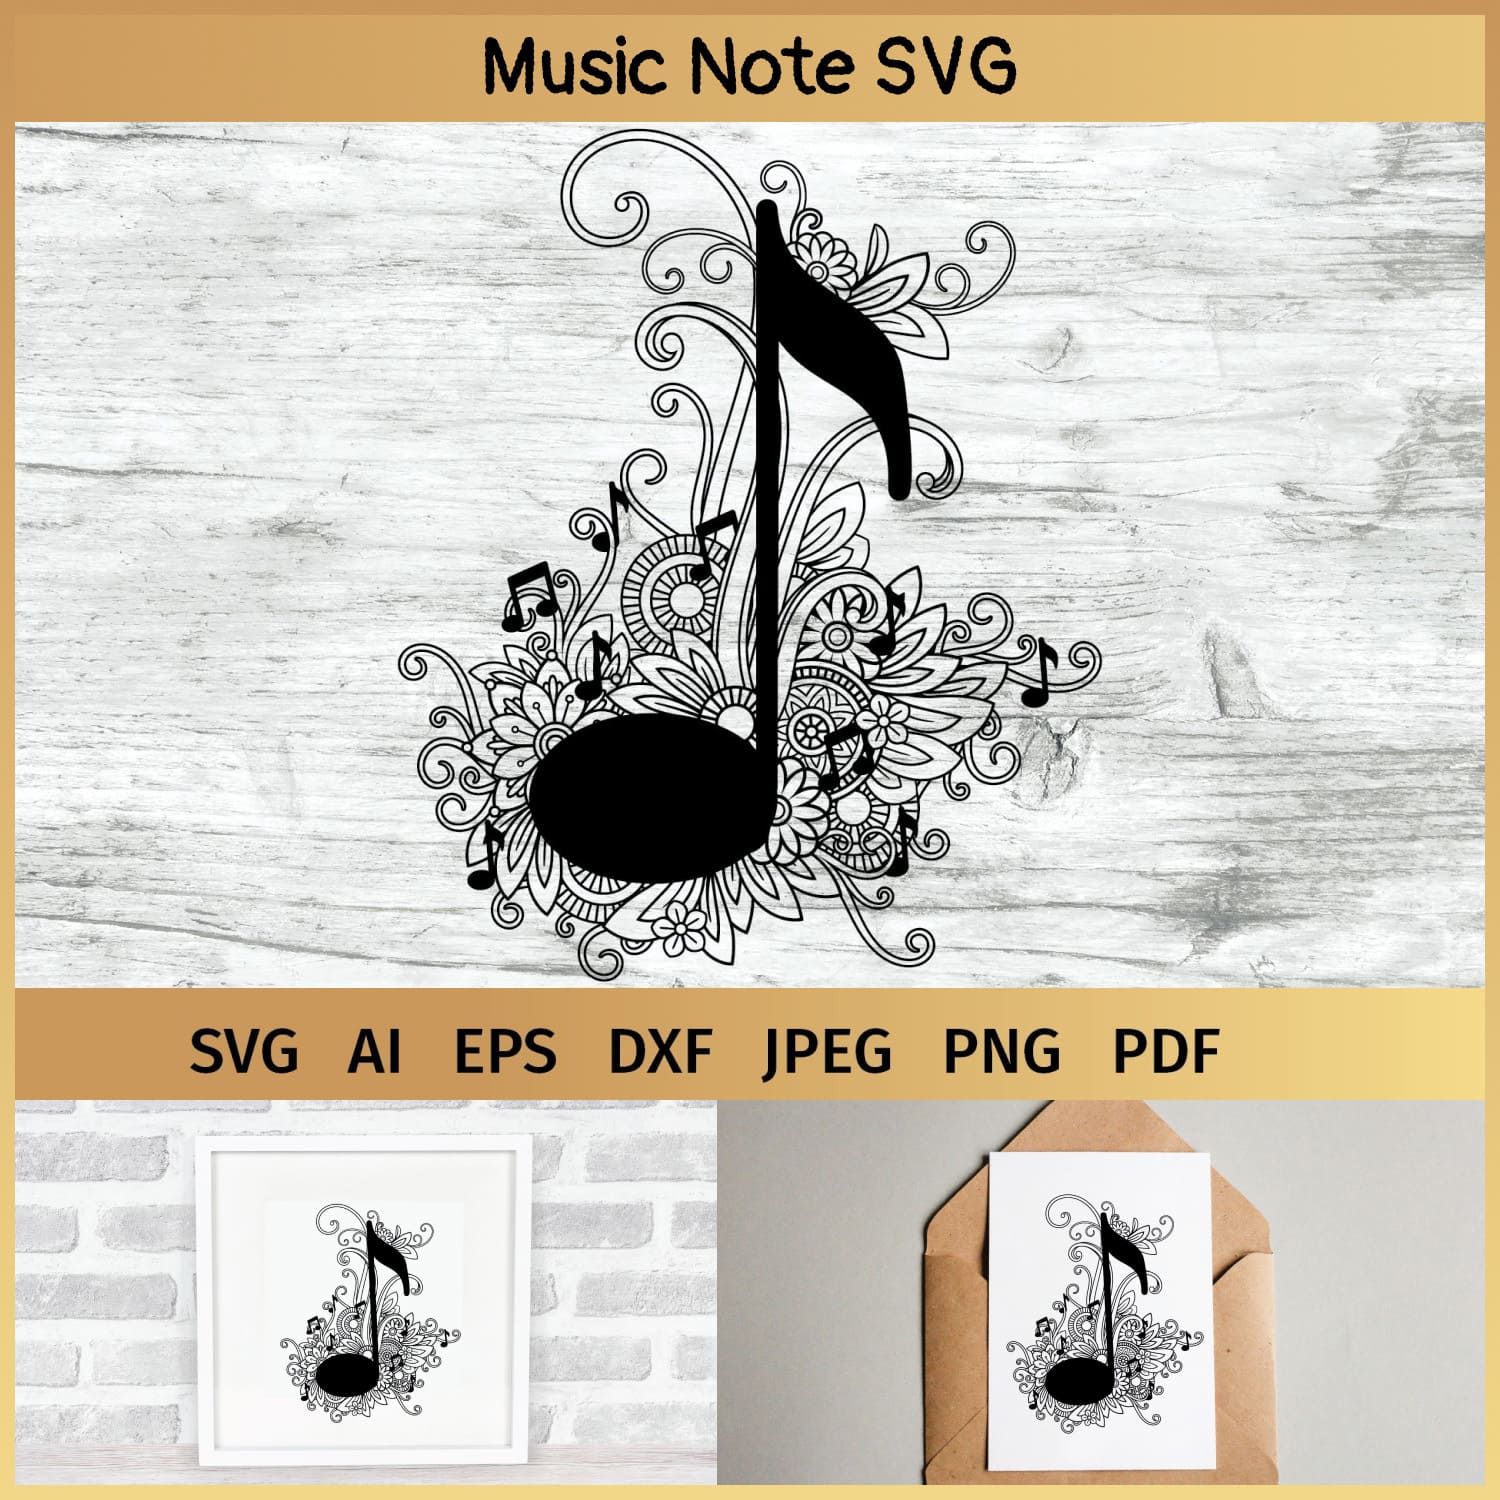 Music Notes SVG | Music SVG.